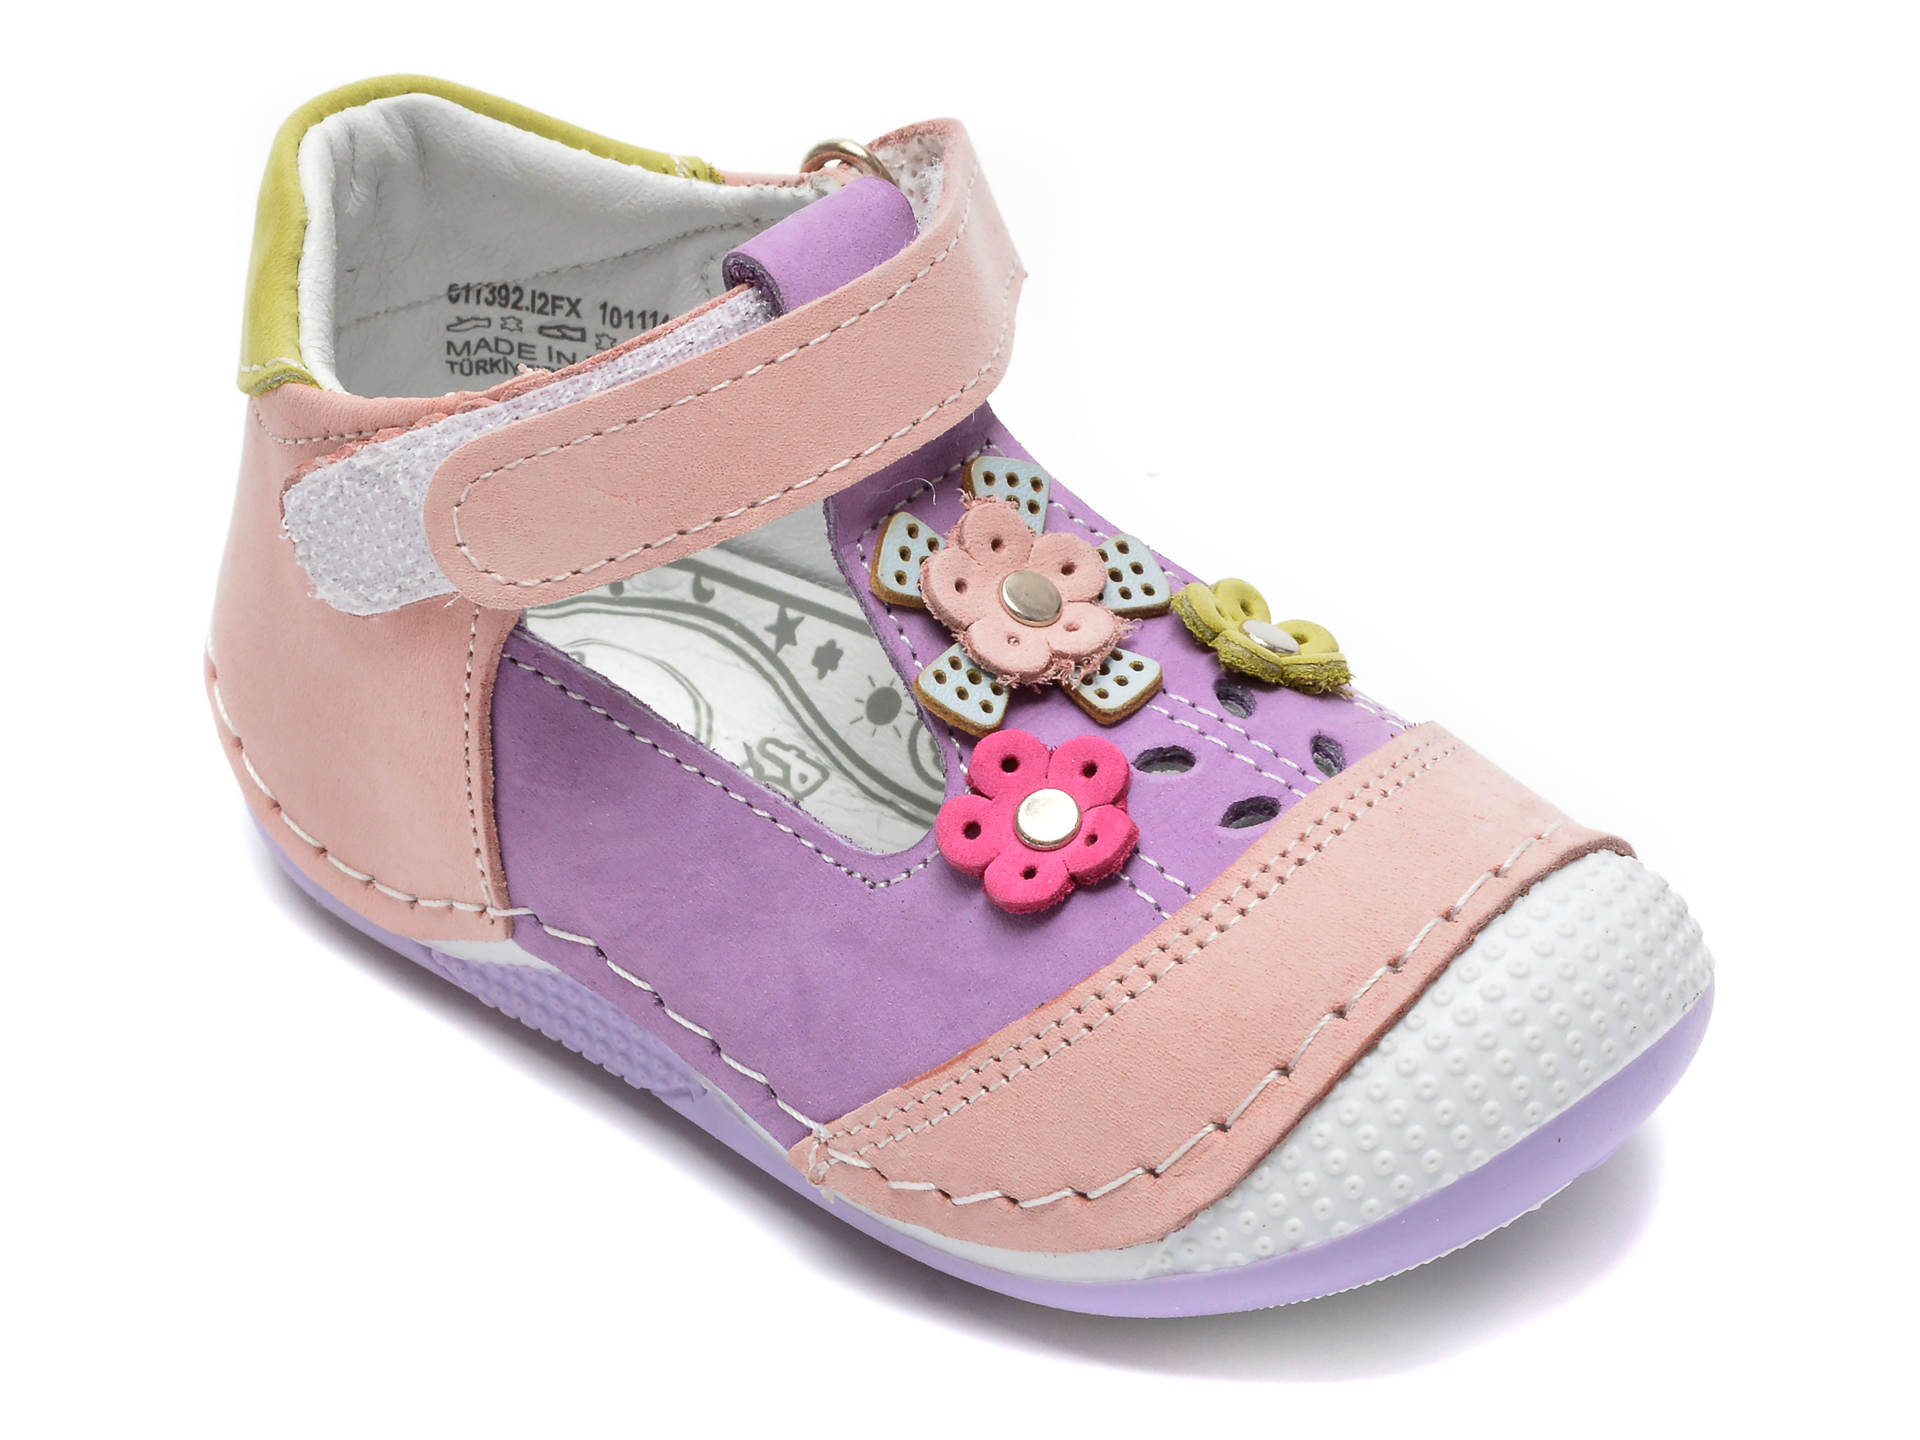 Pantofi POLARIS mov, 511392, din piele naturala /copii/incaltaminte